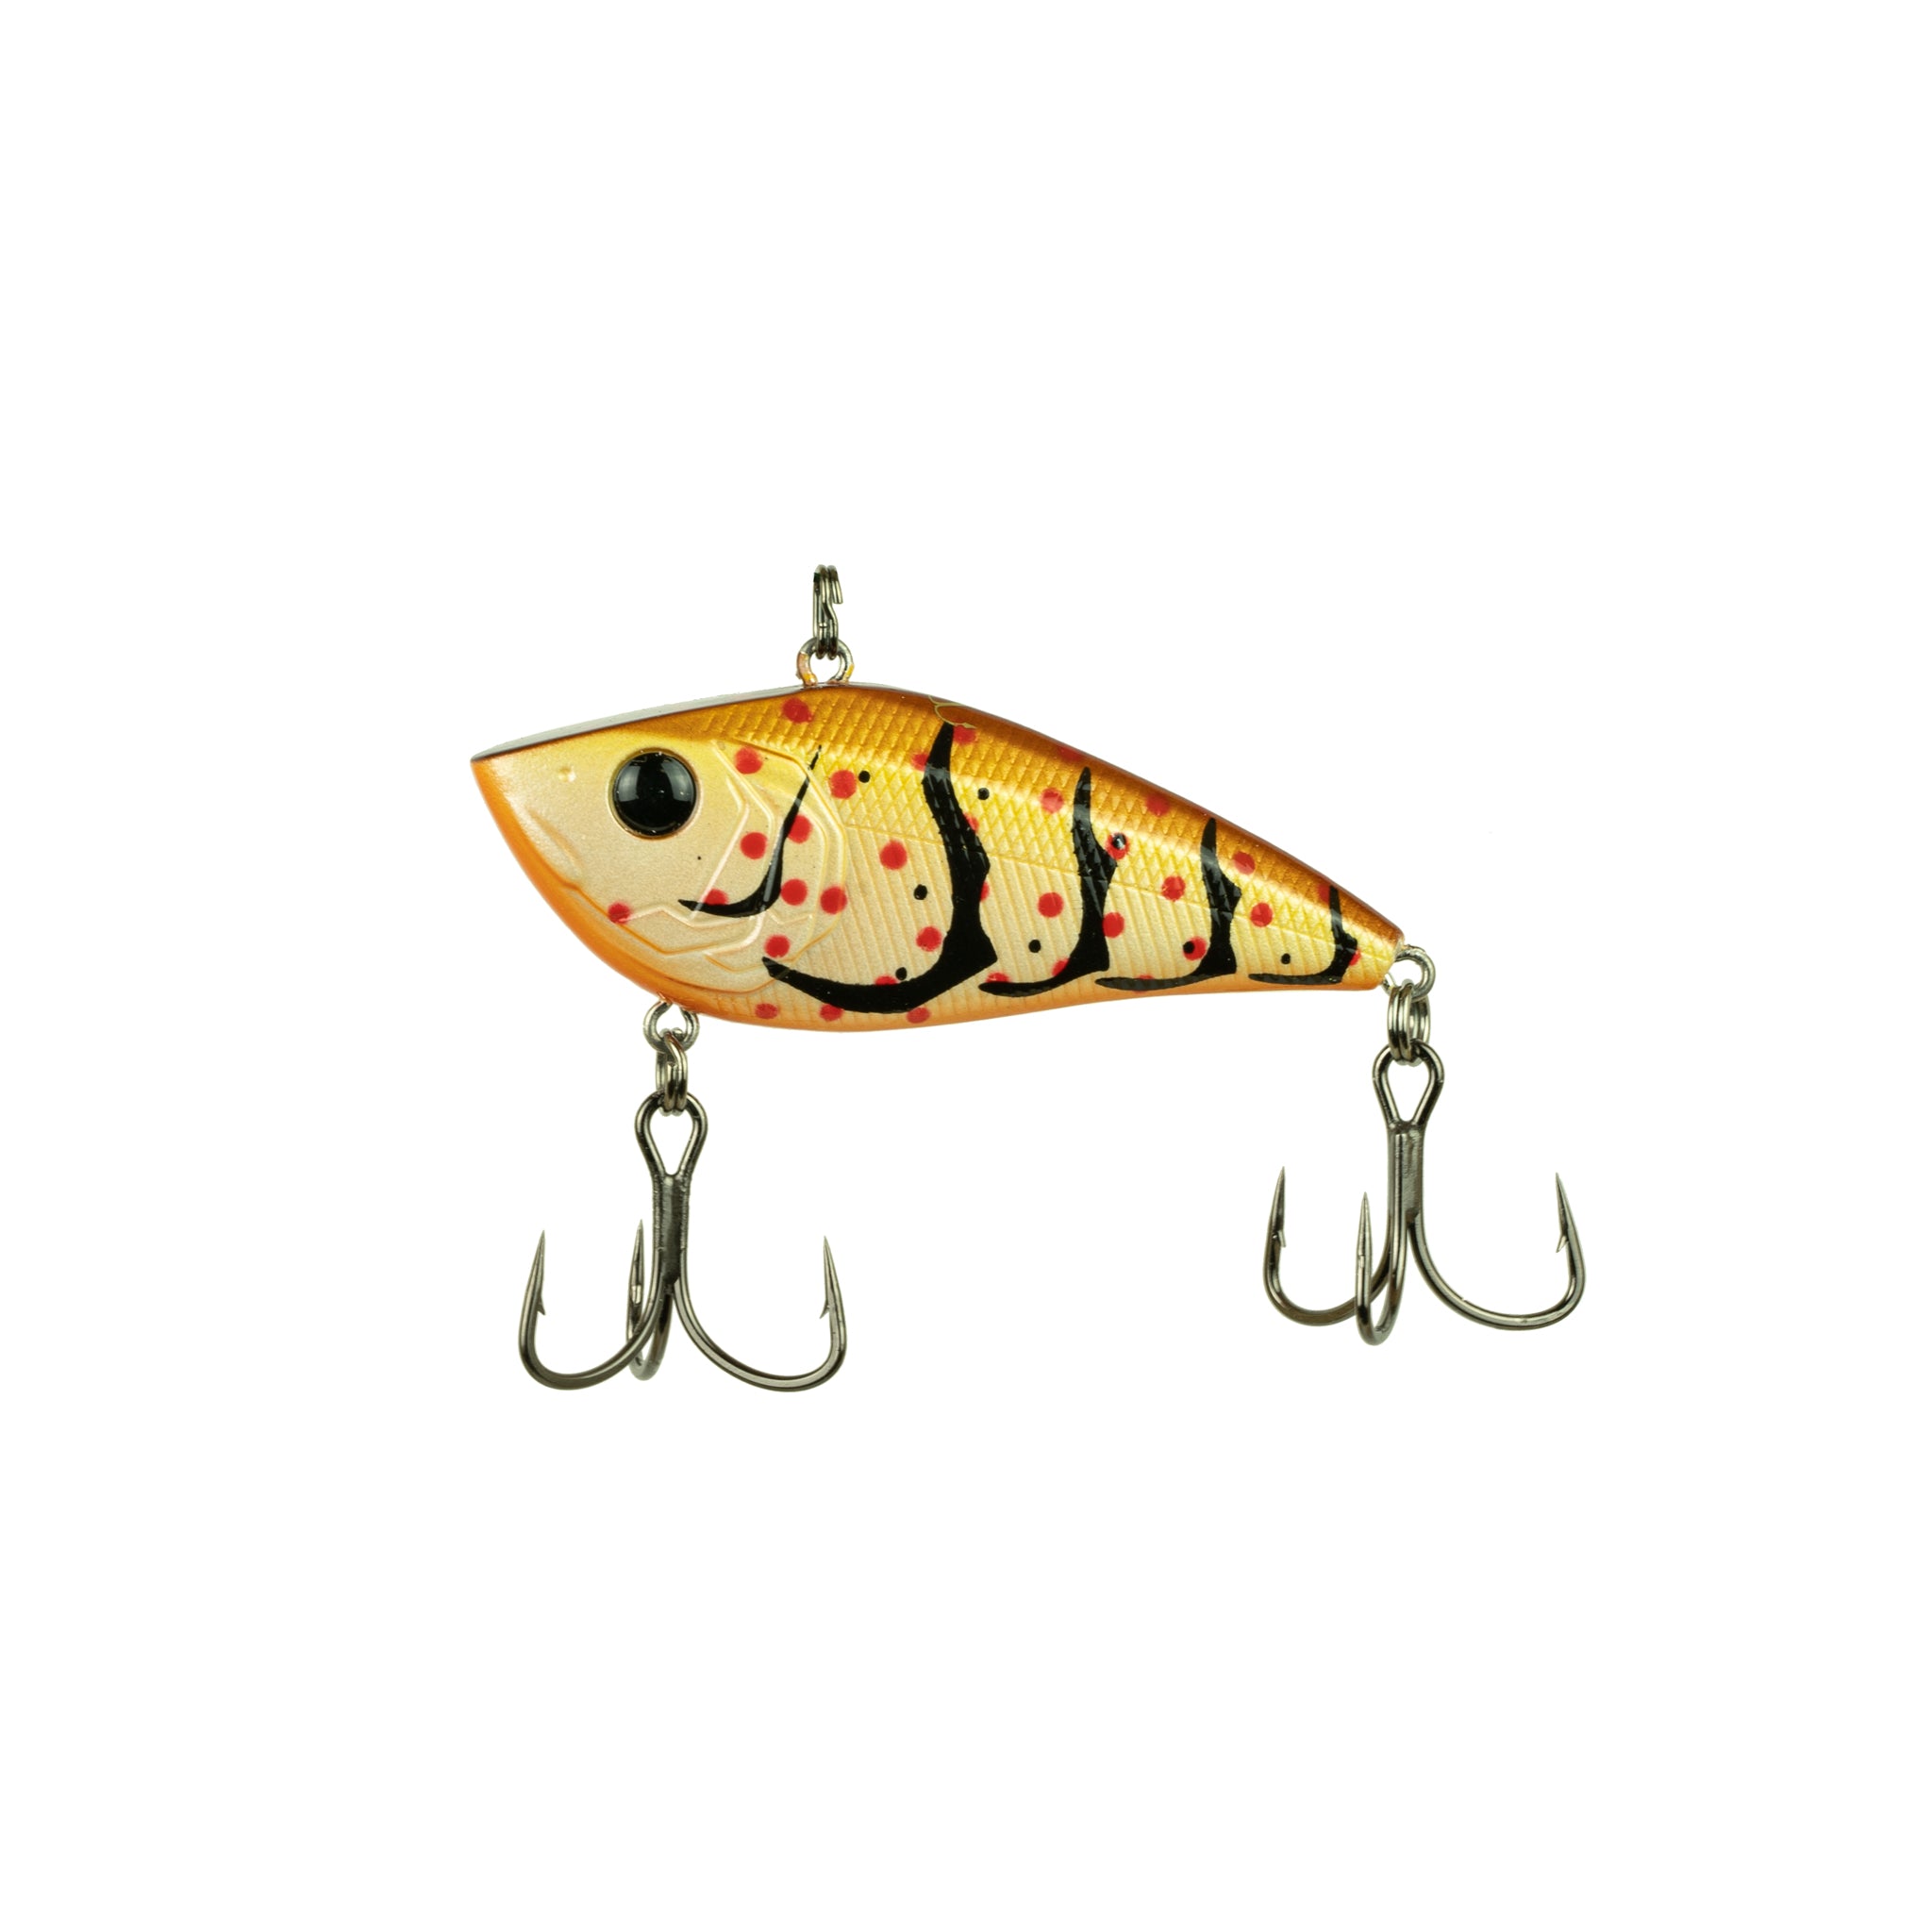 6th Sense Fishing - Snatch 70x Lipless Crankbait - Molting Crawfish